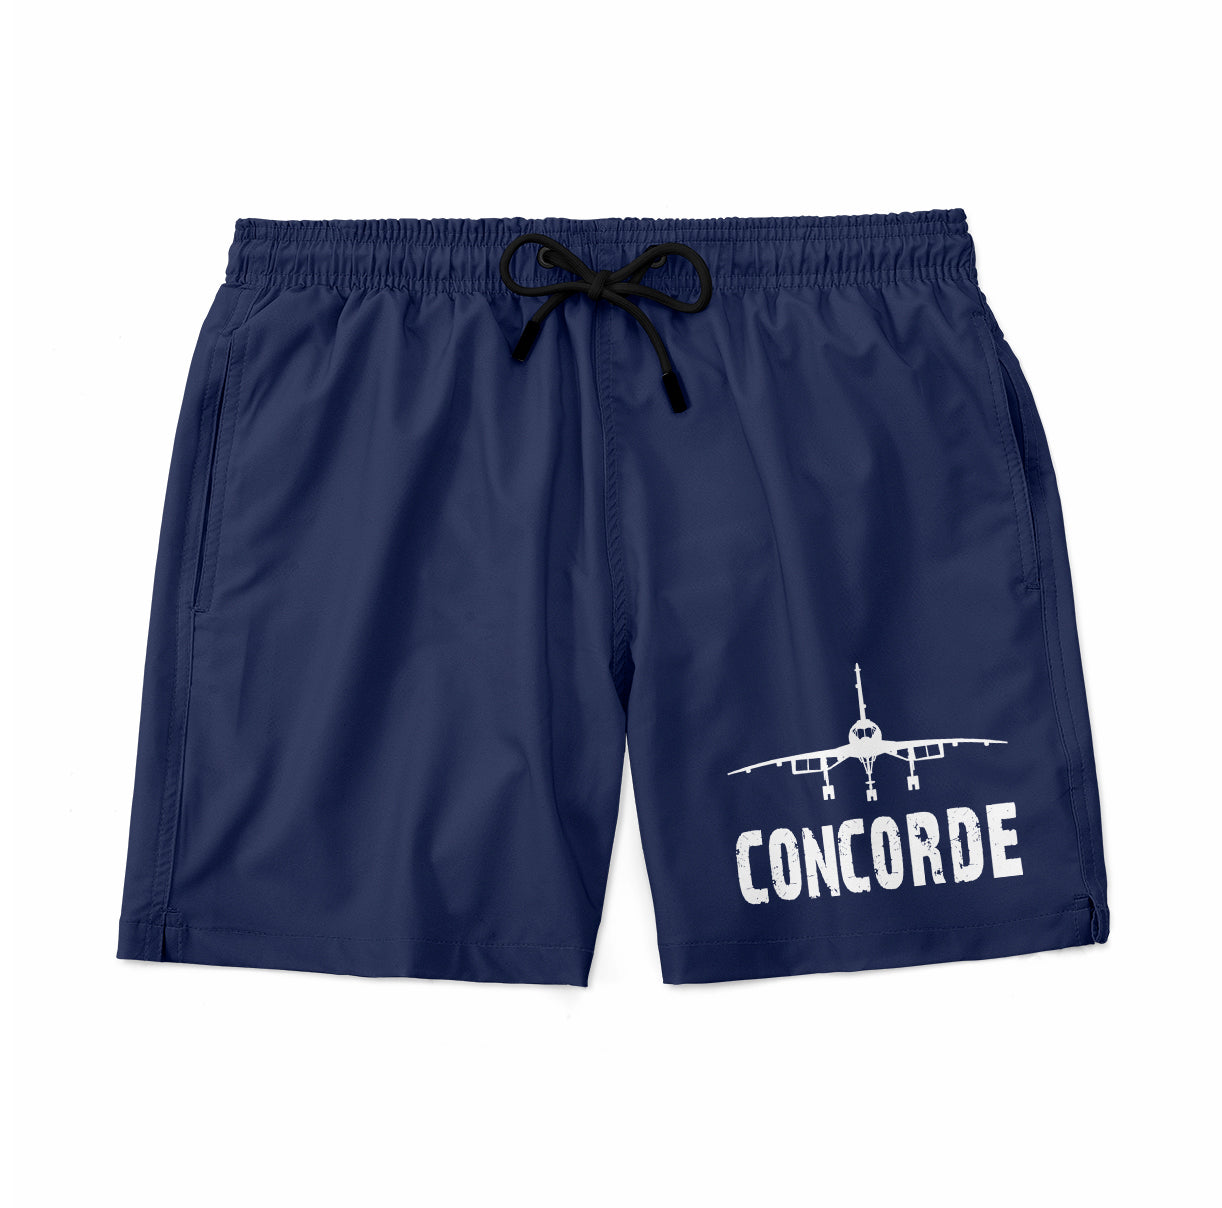 Concorde & Plane Designed Swim Trunks & Shorts